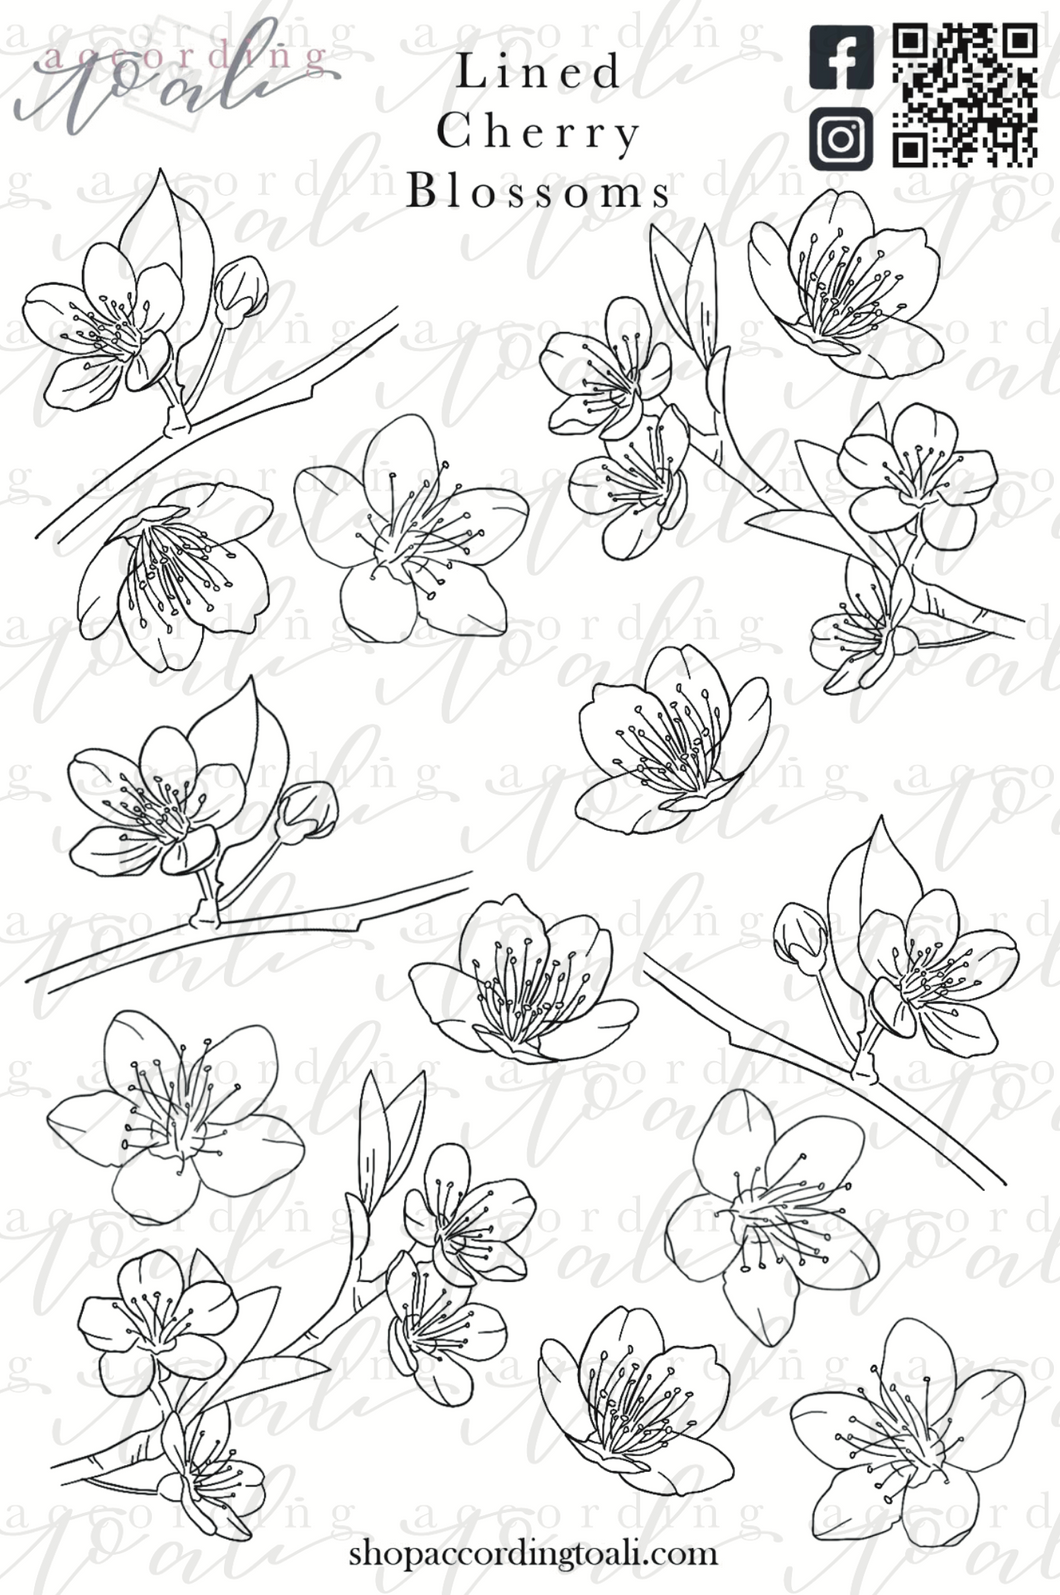 Lined Cherry Blossoms Sticker Sheet